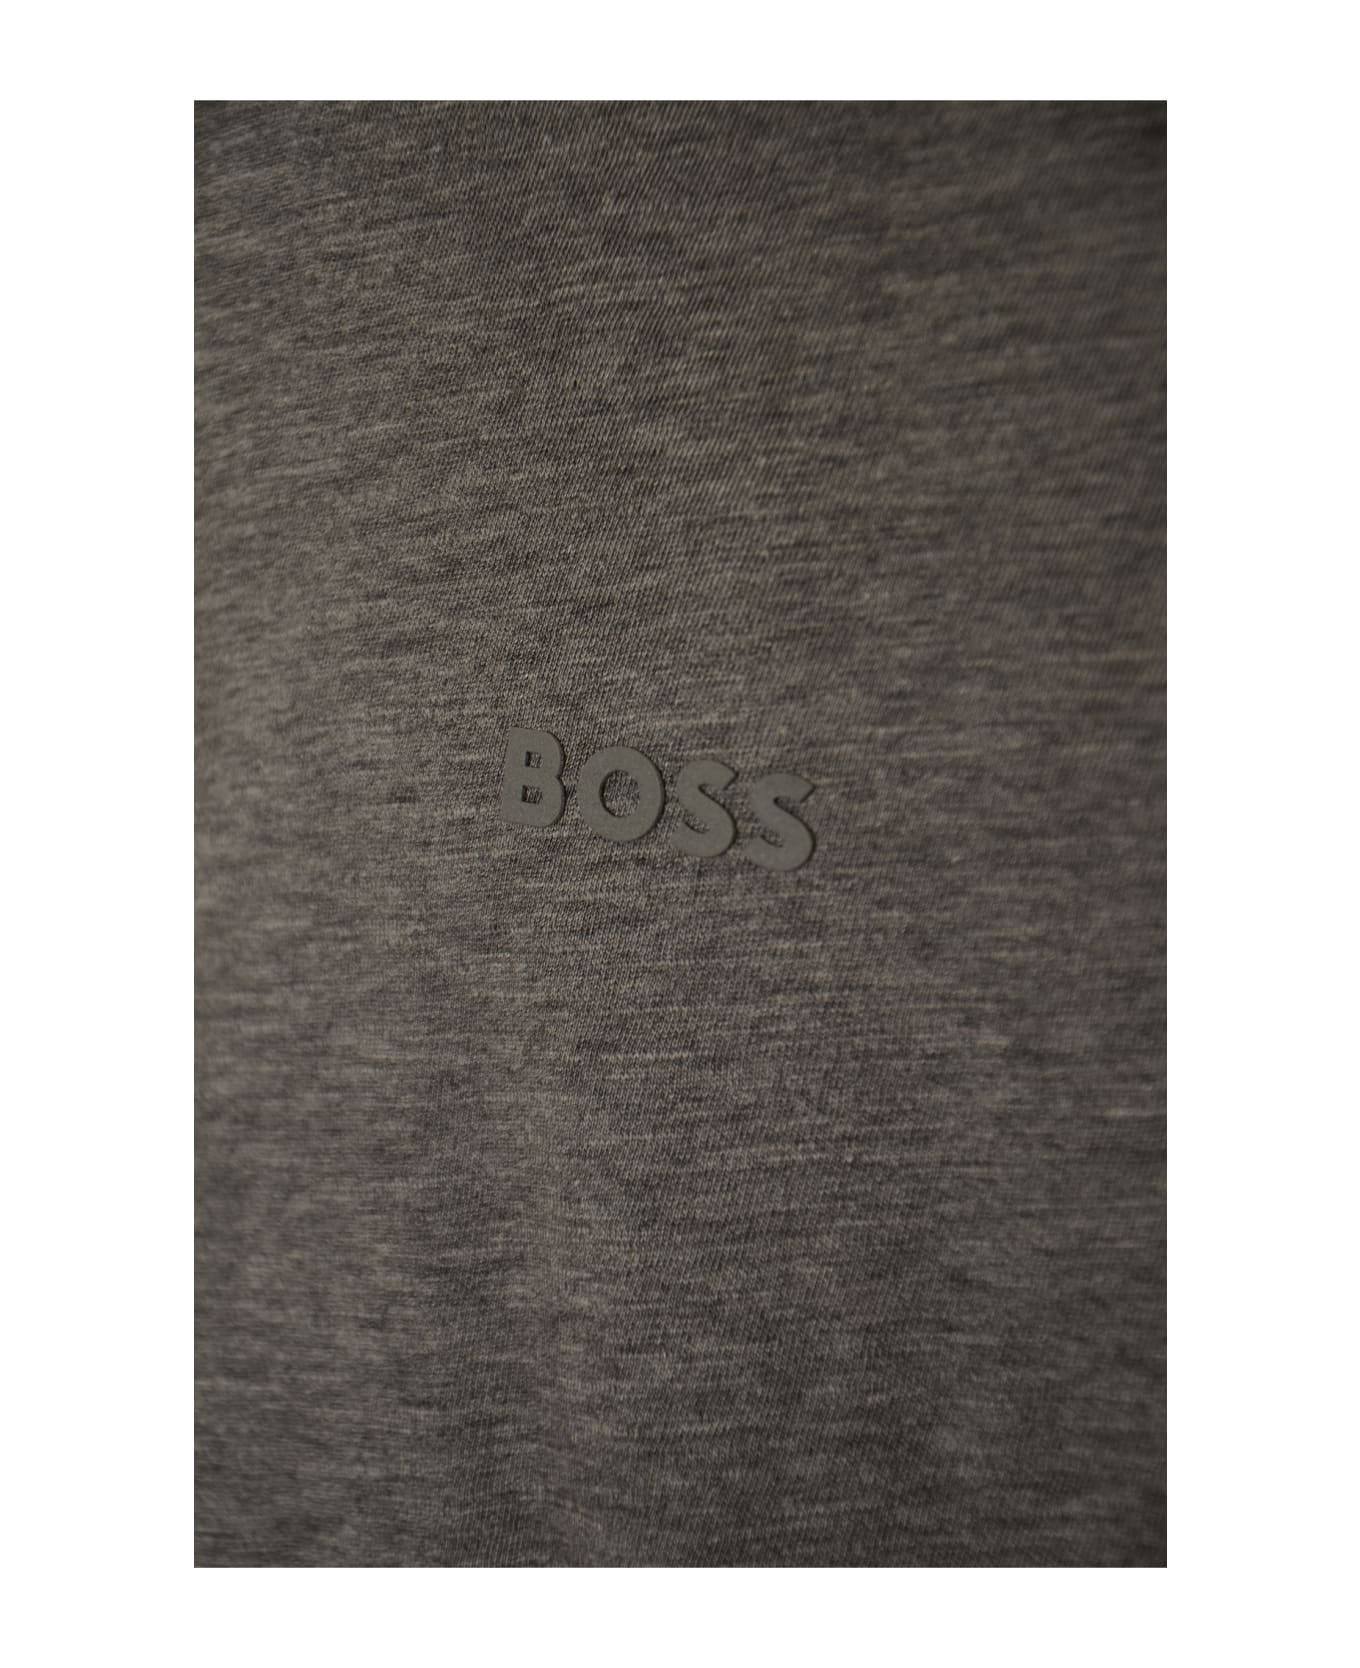 Hugo Boss Round Neck Classic T-shirt - Light Pastel Grey